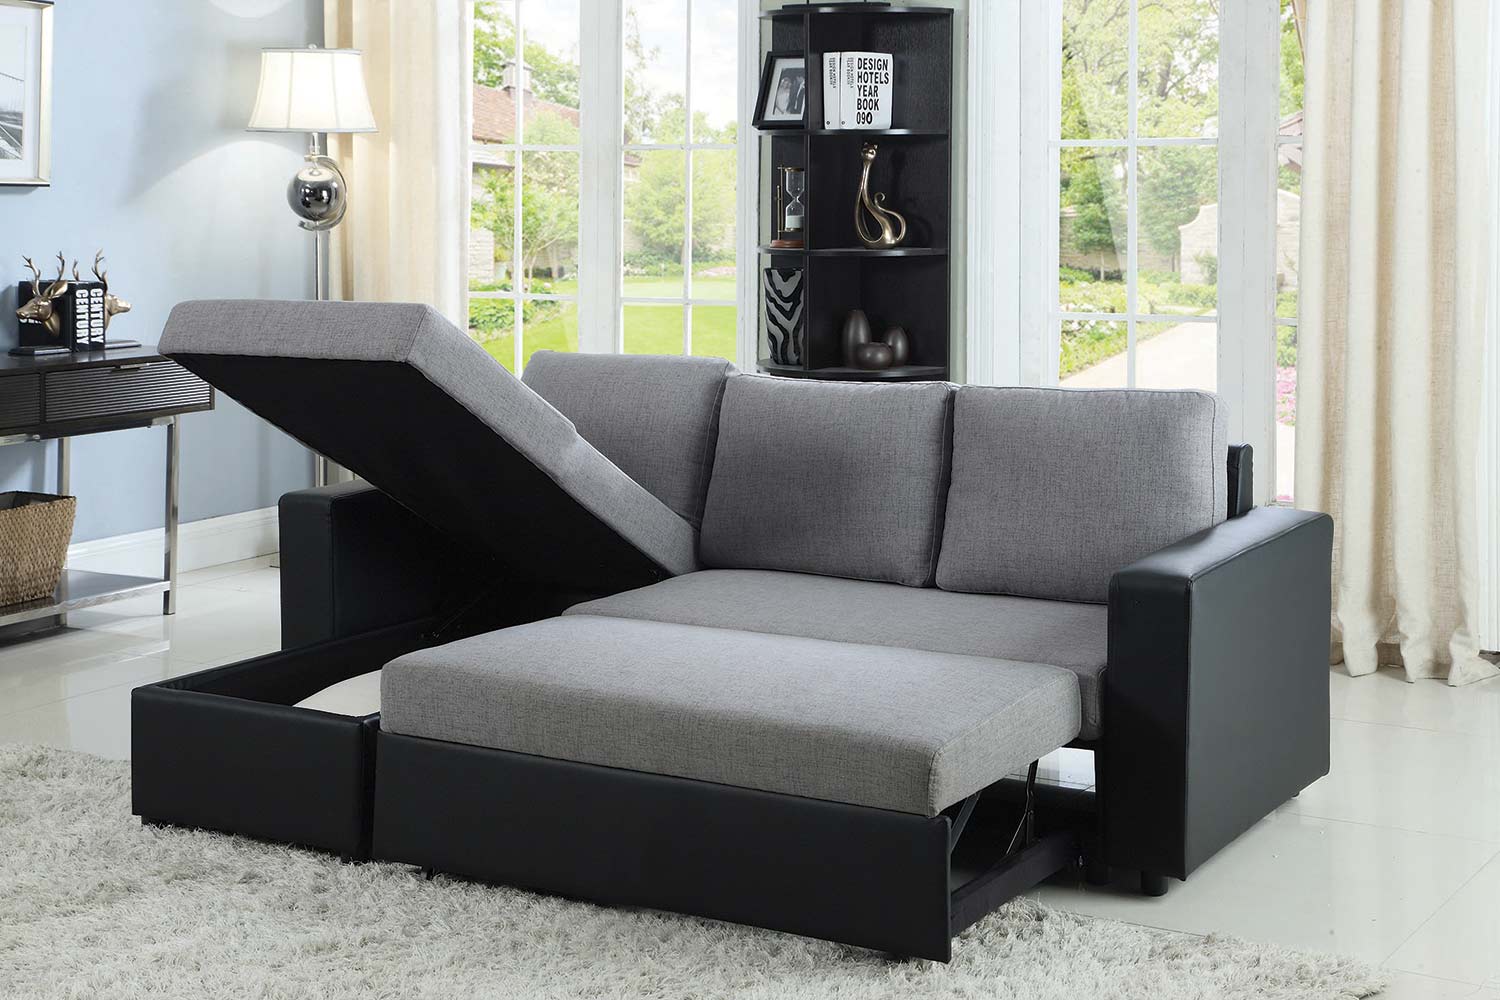 Coaster Baylor Sectional Sofa - Grey/Black